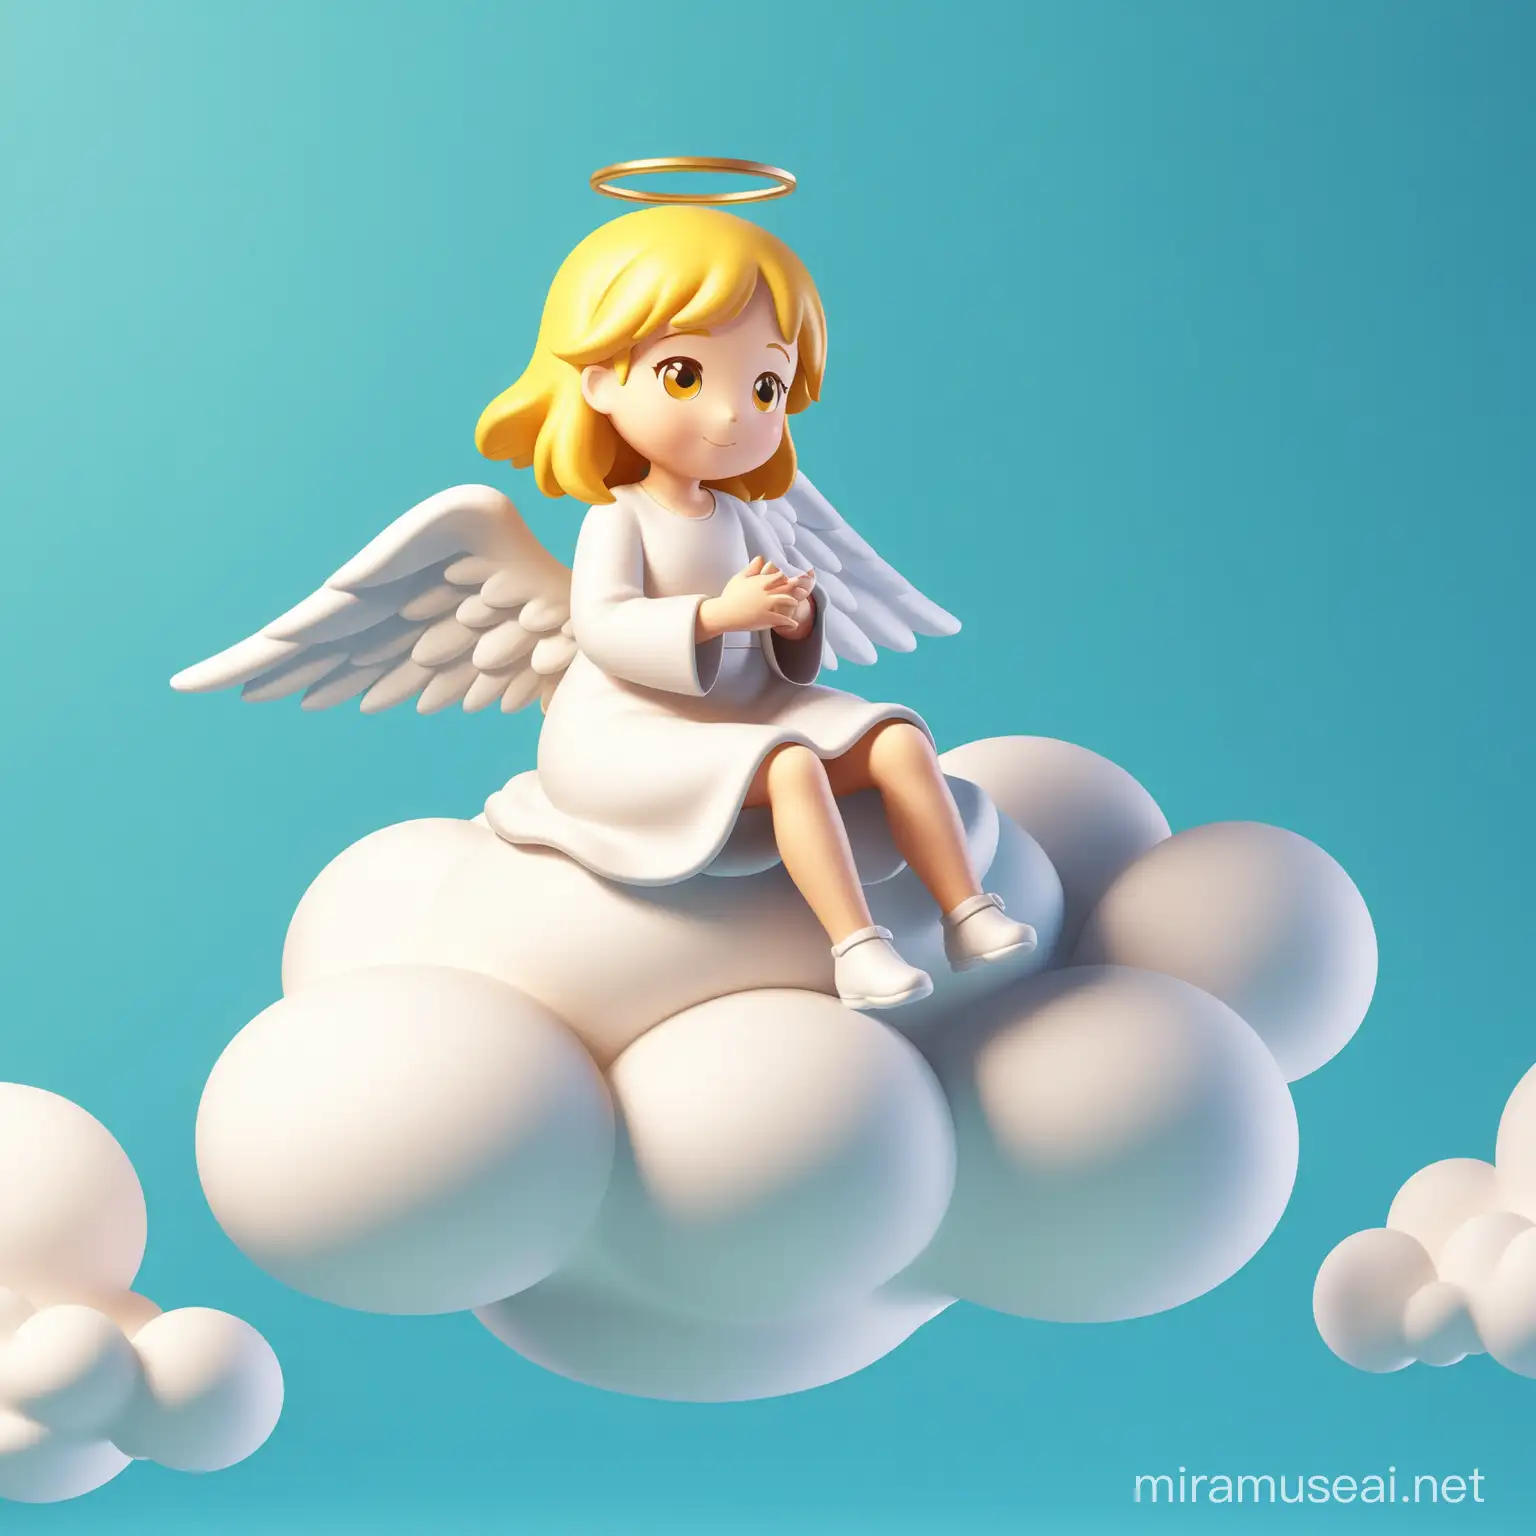 Cartoon Biblical Angel Seated on Fluffy Cloud